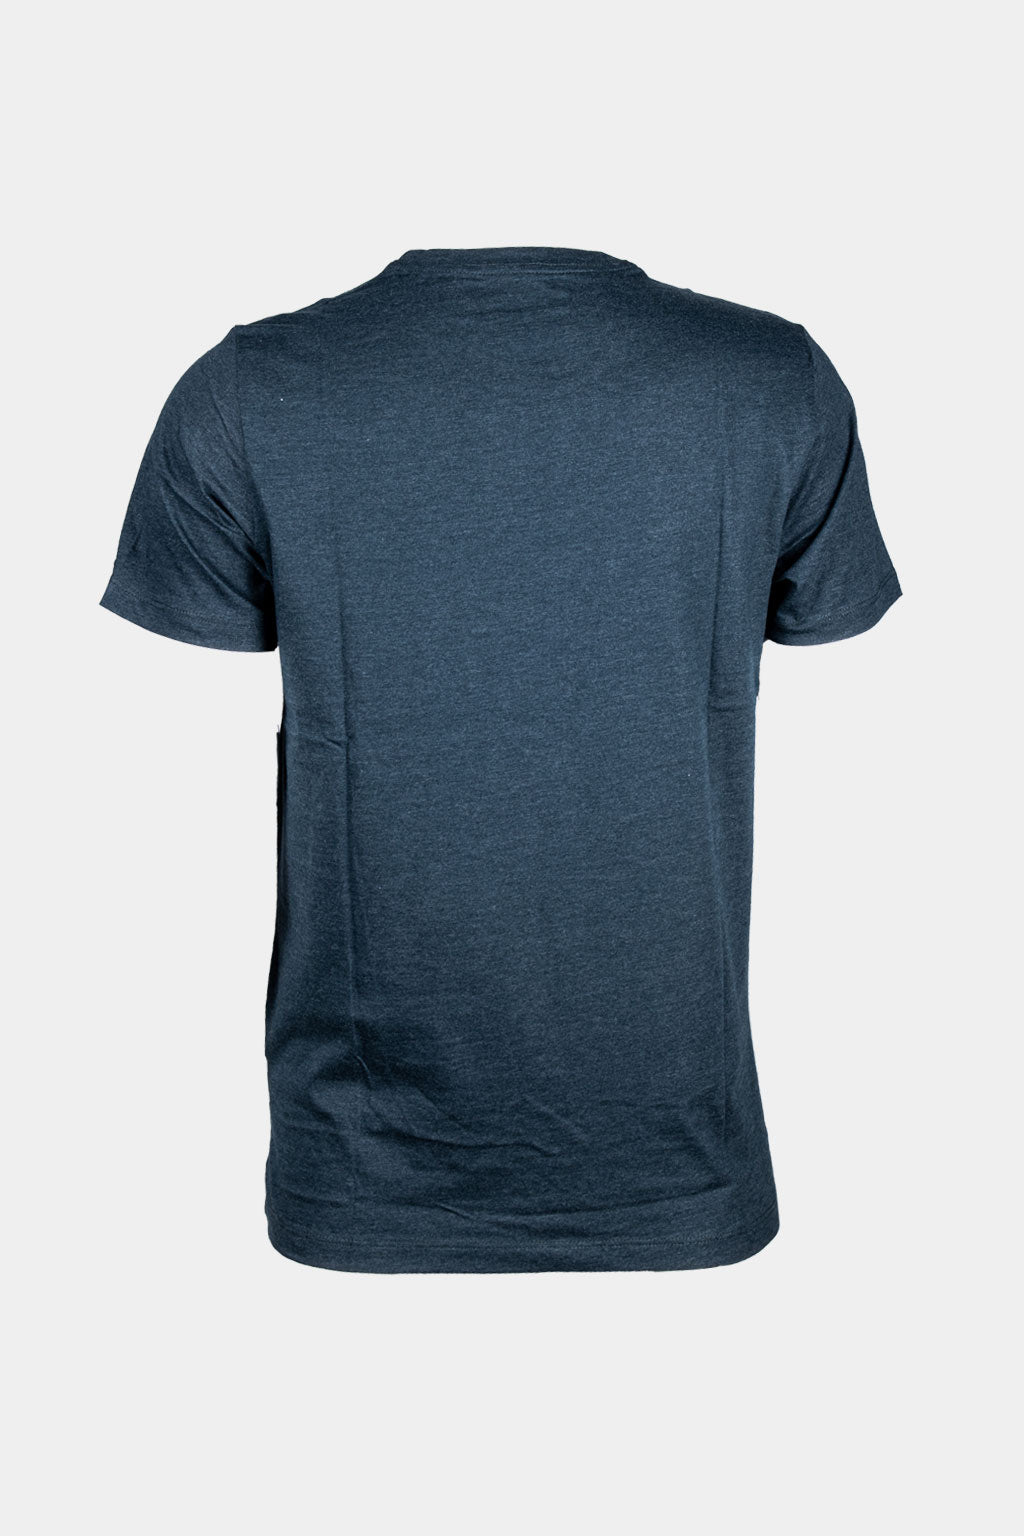 Medicine - Men's cotton T-shirt with a print